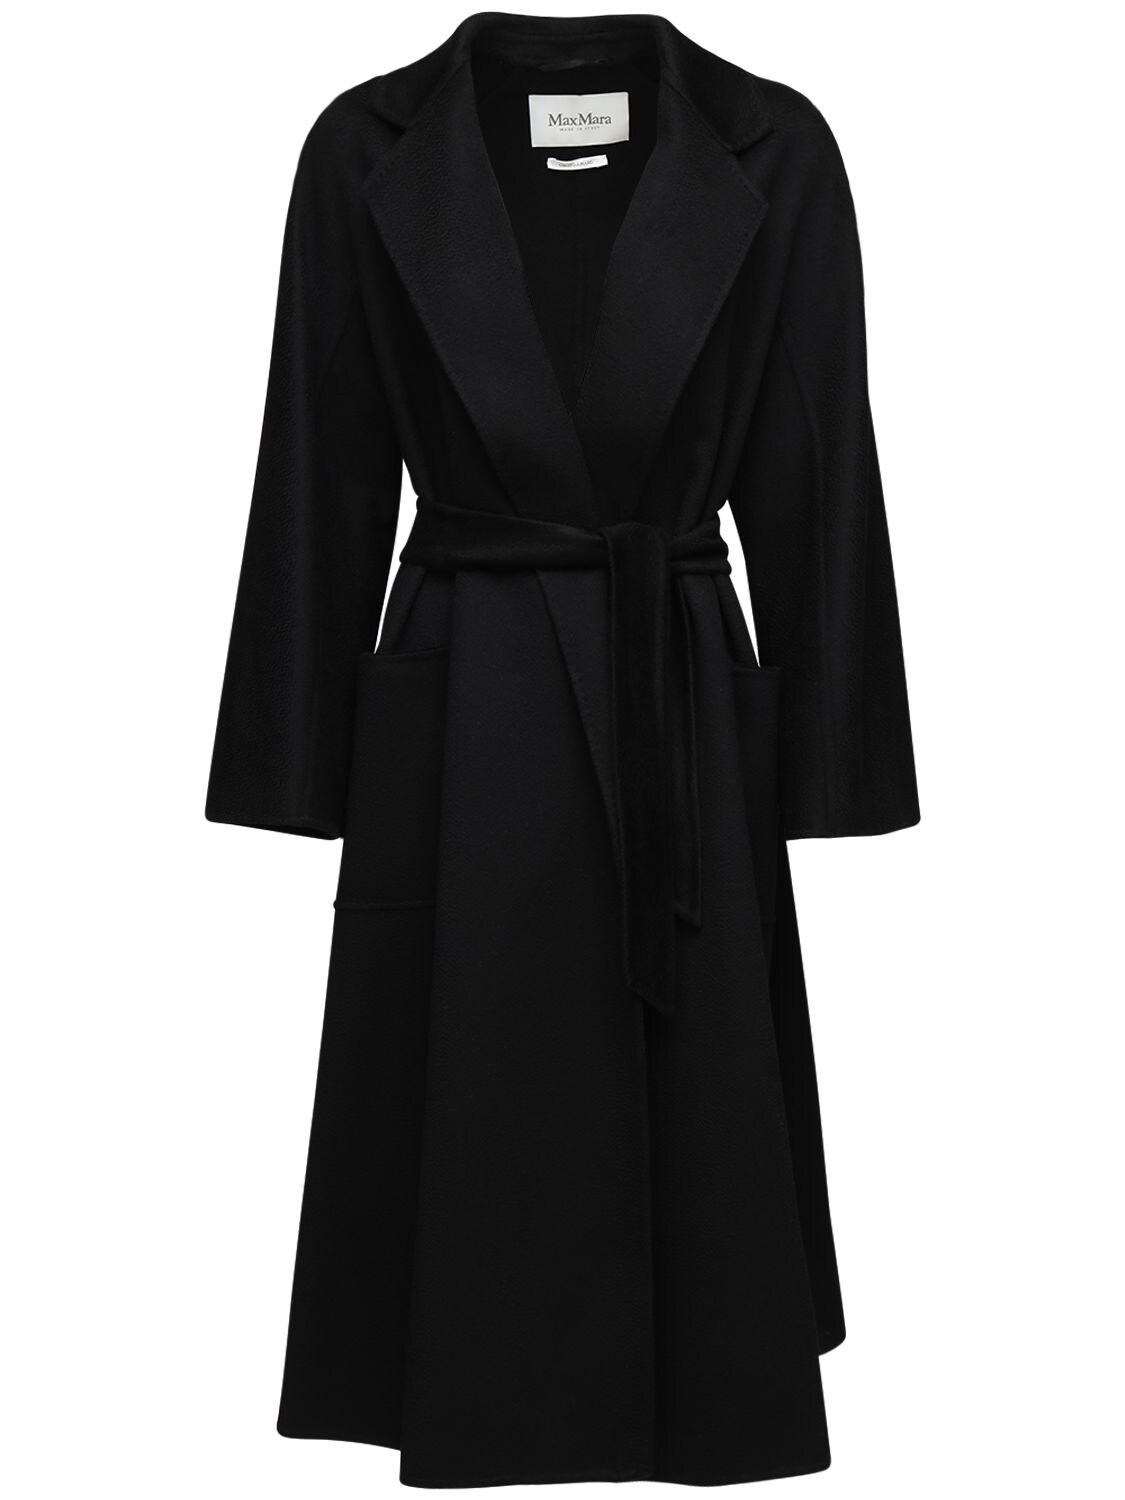 Max Mara Labbro Belted Cashmere Coat in Black - Save 50% - Lyst